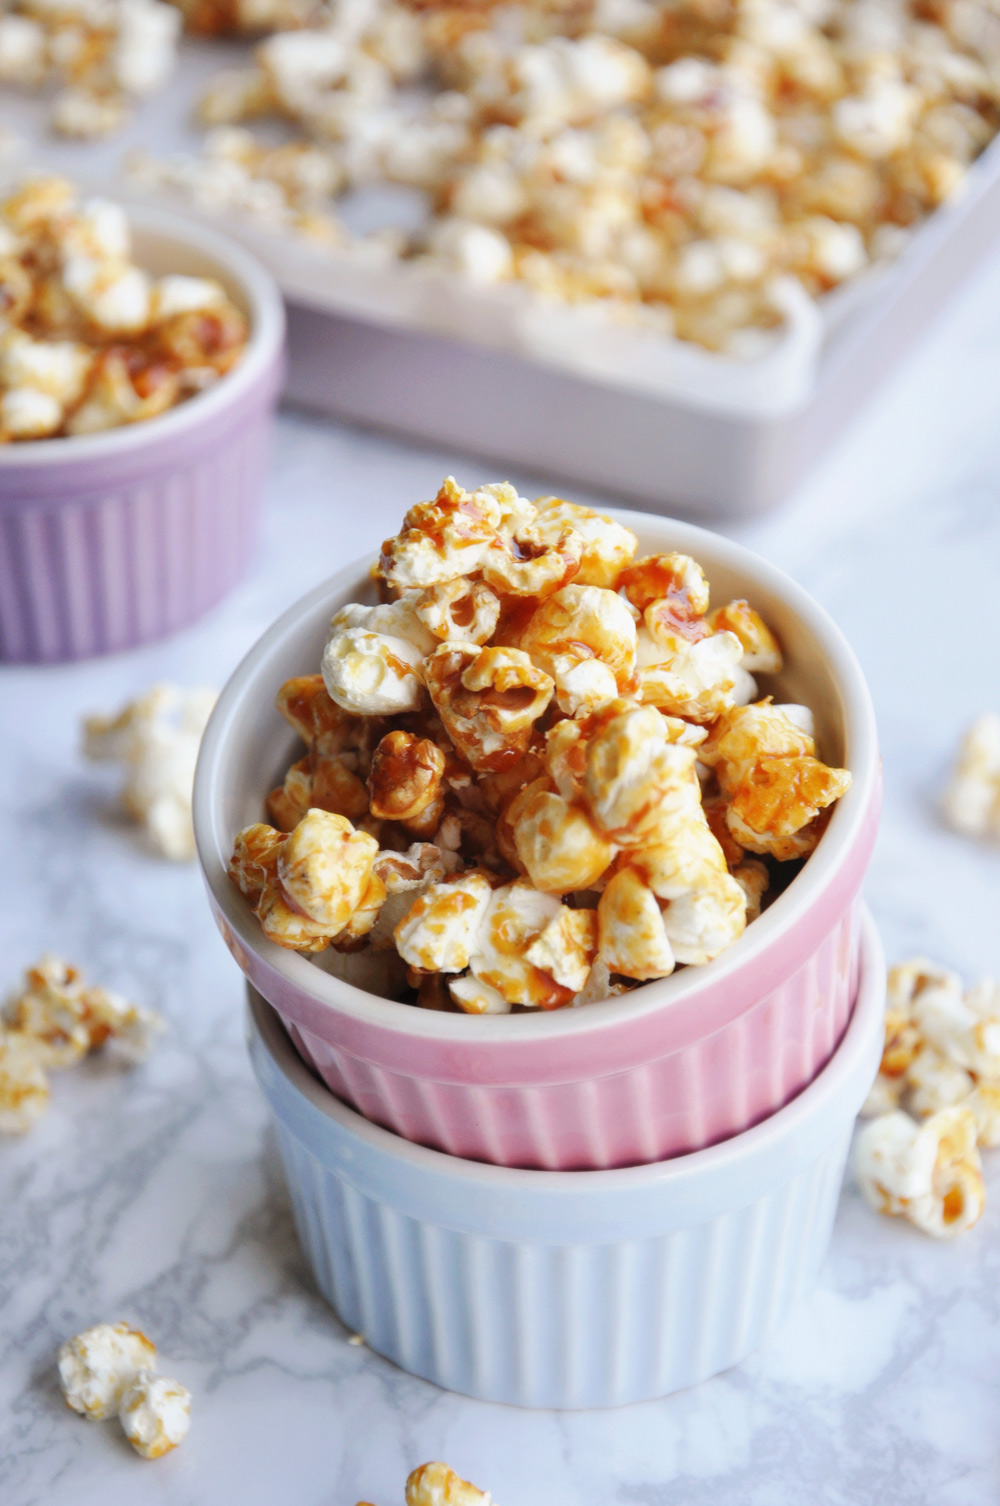 A Day Recipes : Home-made Caramel Popcorn For Movie Night 8